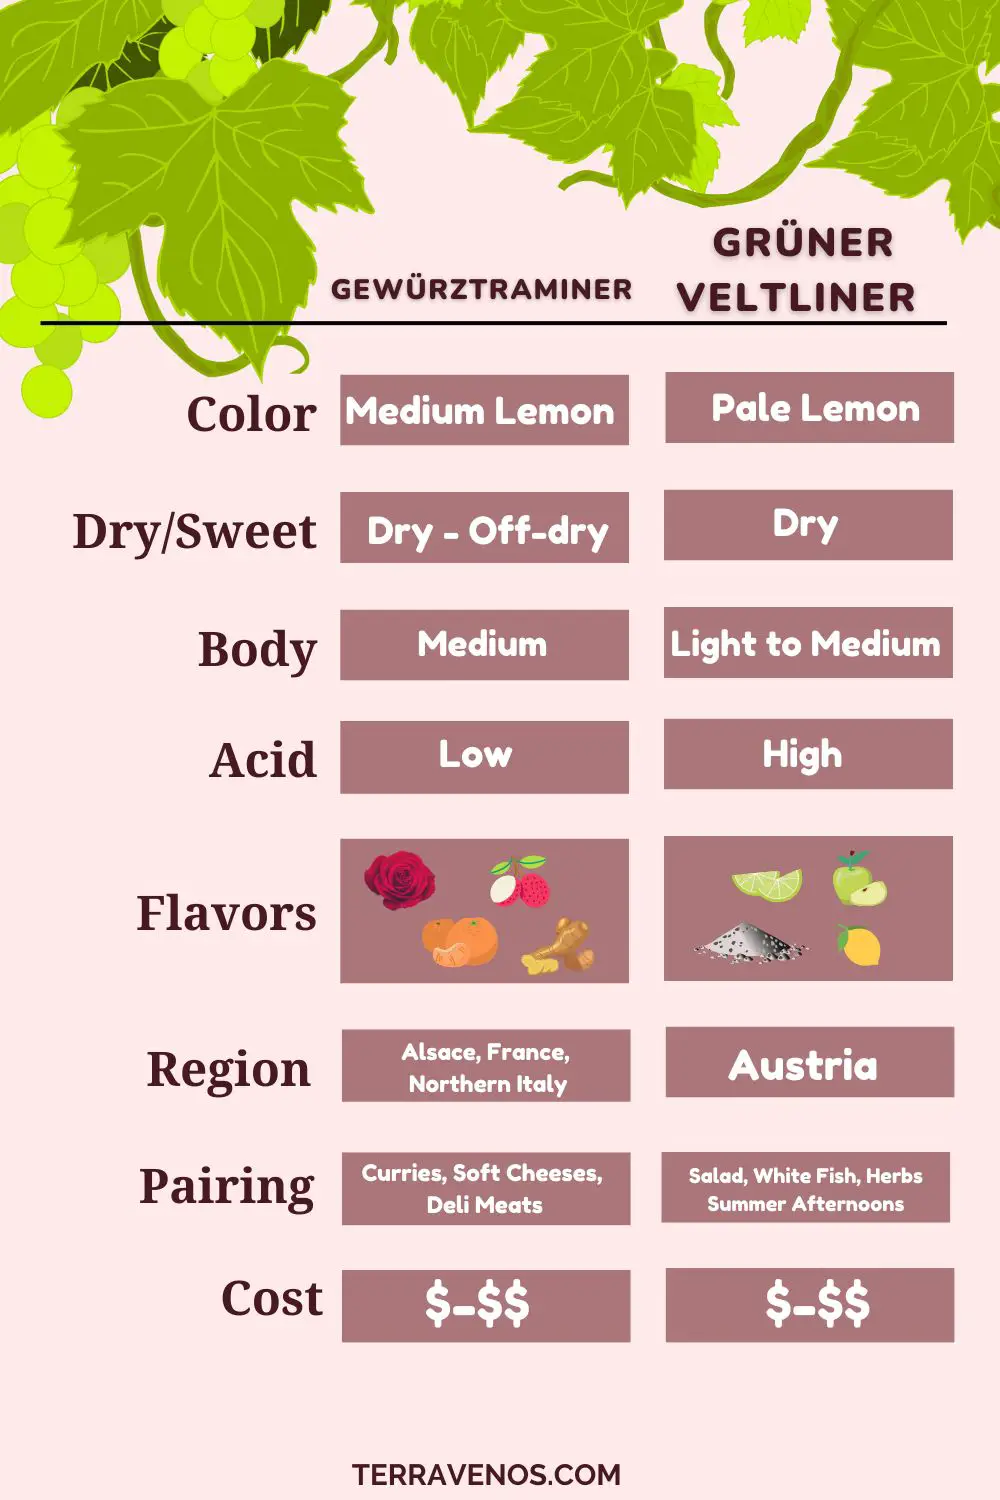 gewurztraminer-vs-gruner-veltliner-wine-comparison-infographic